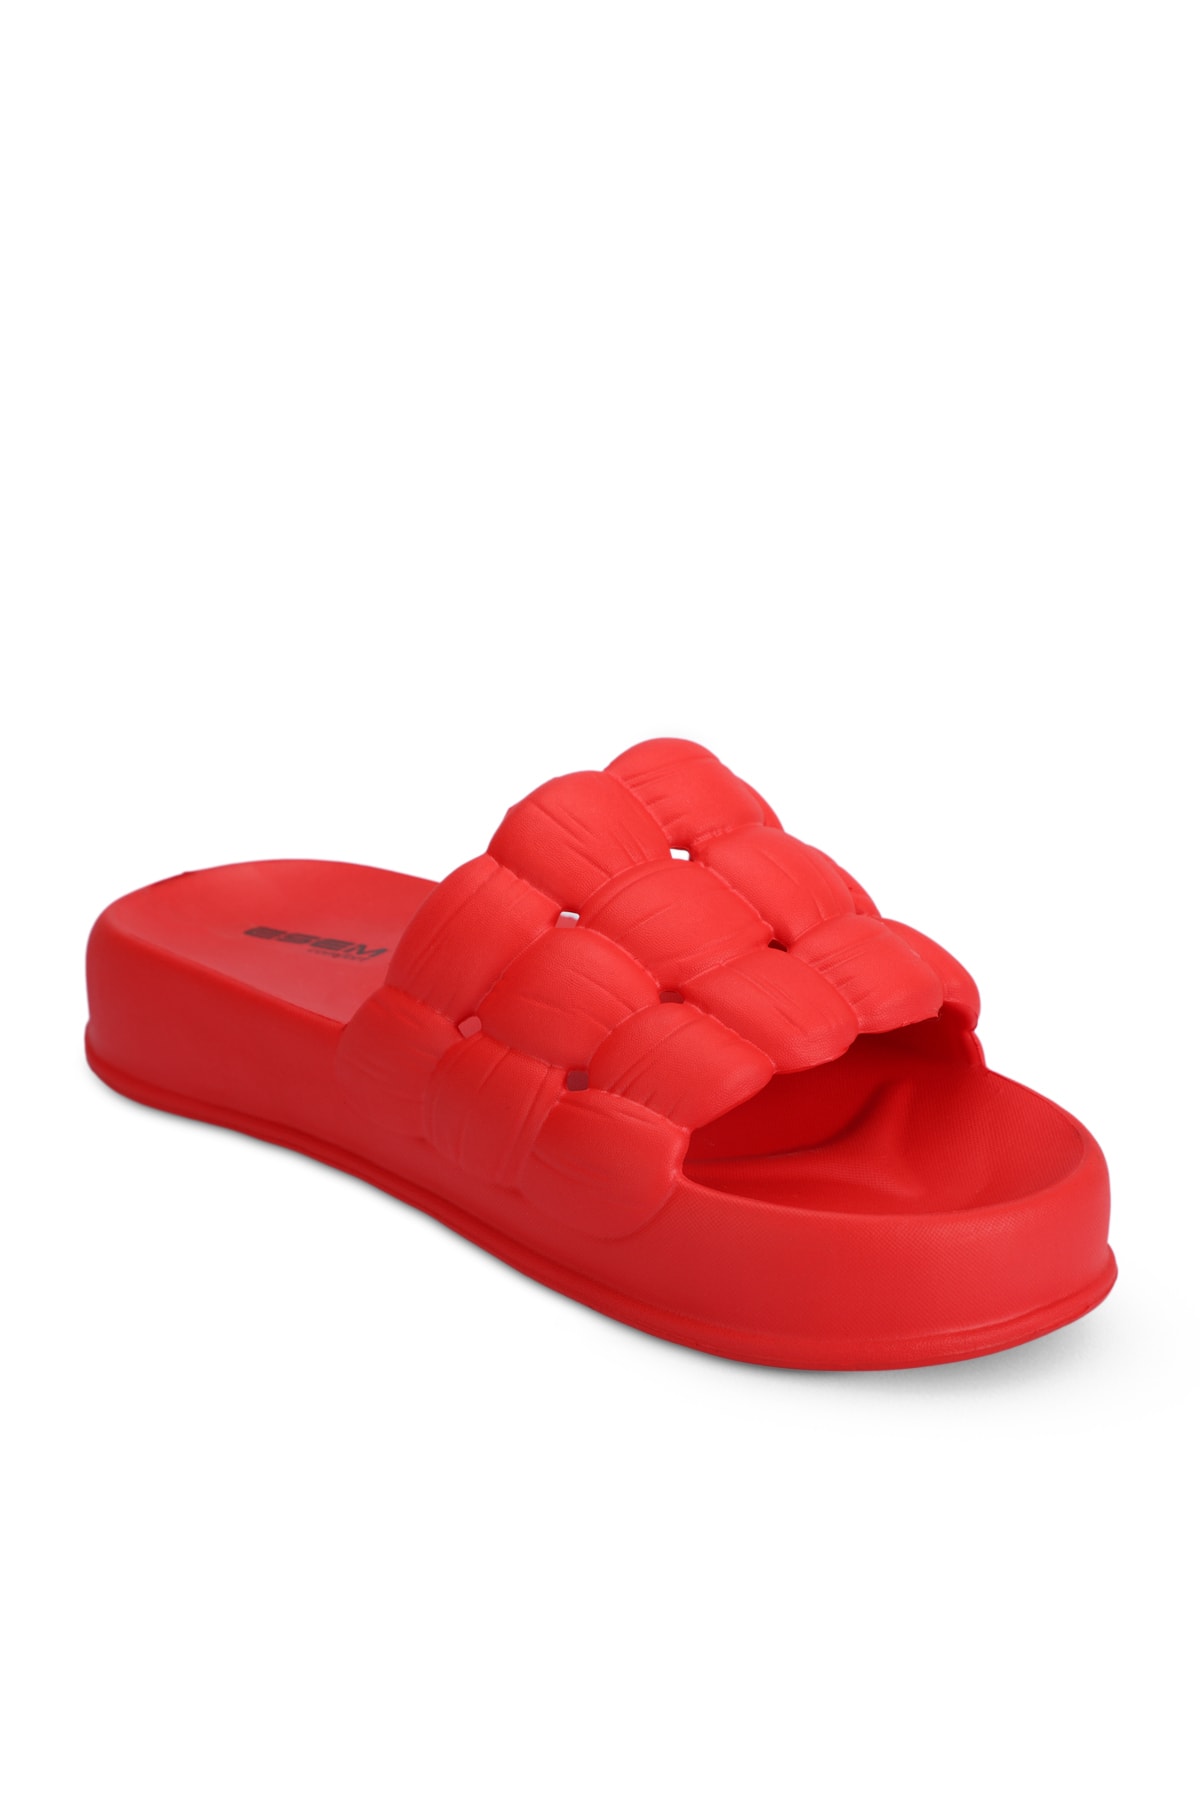 Esem OFFU Women's Slippers Red